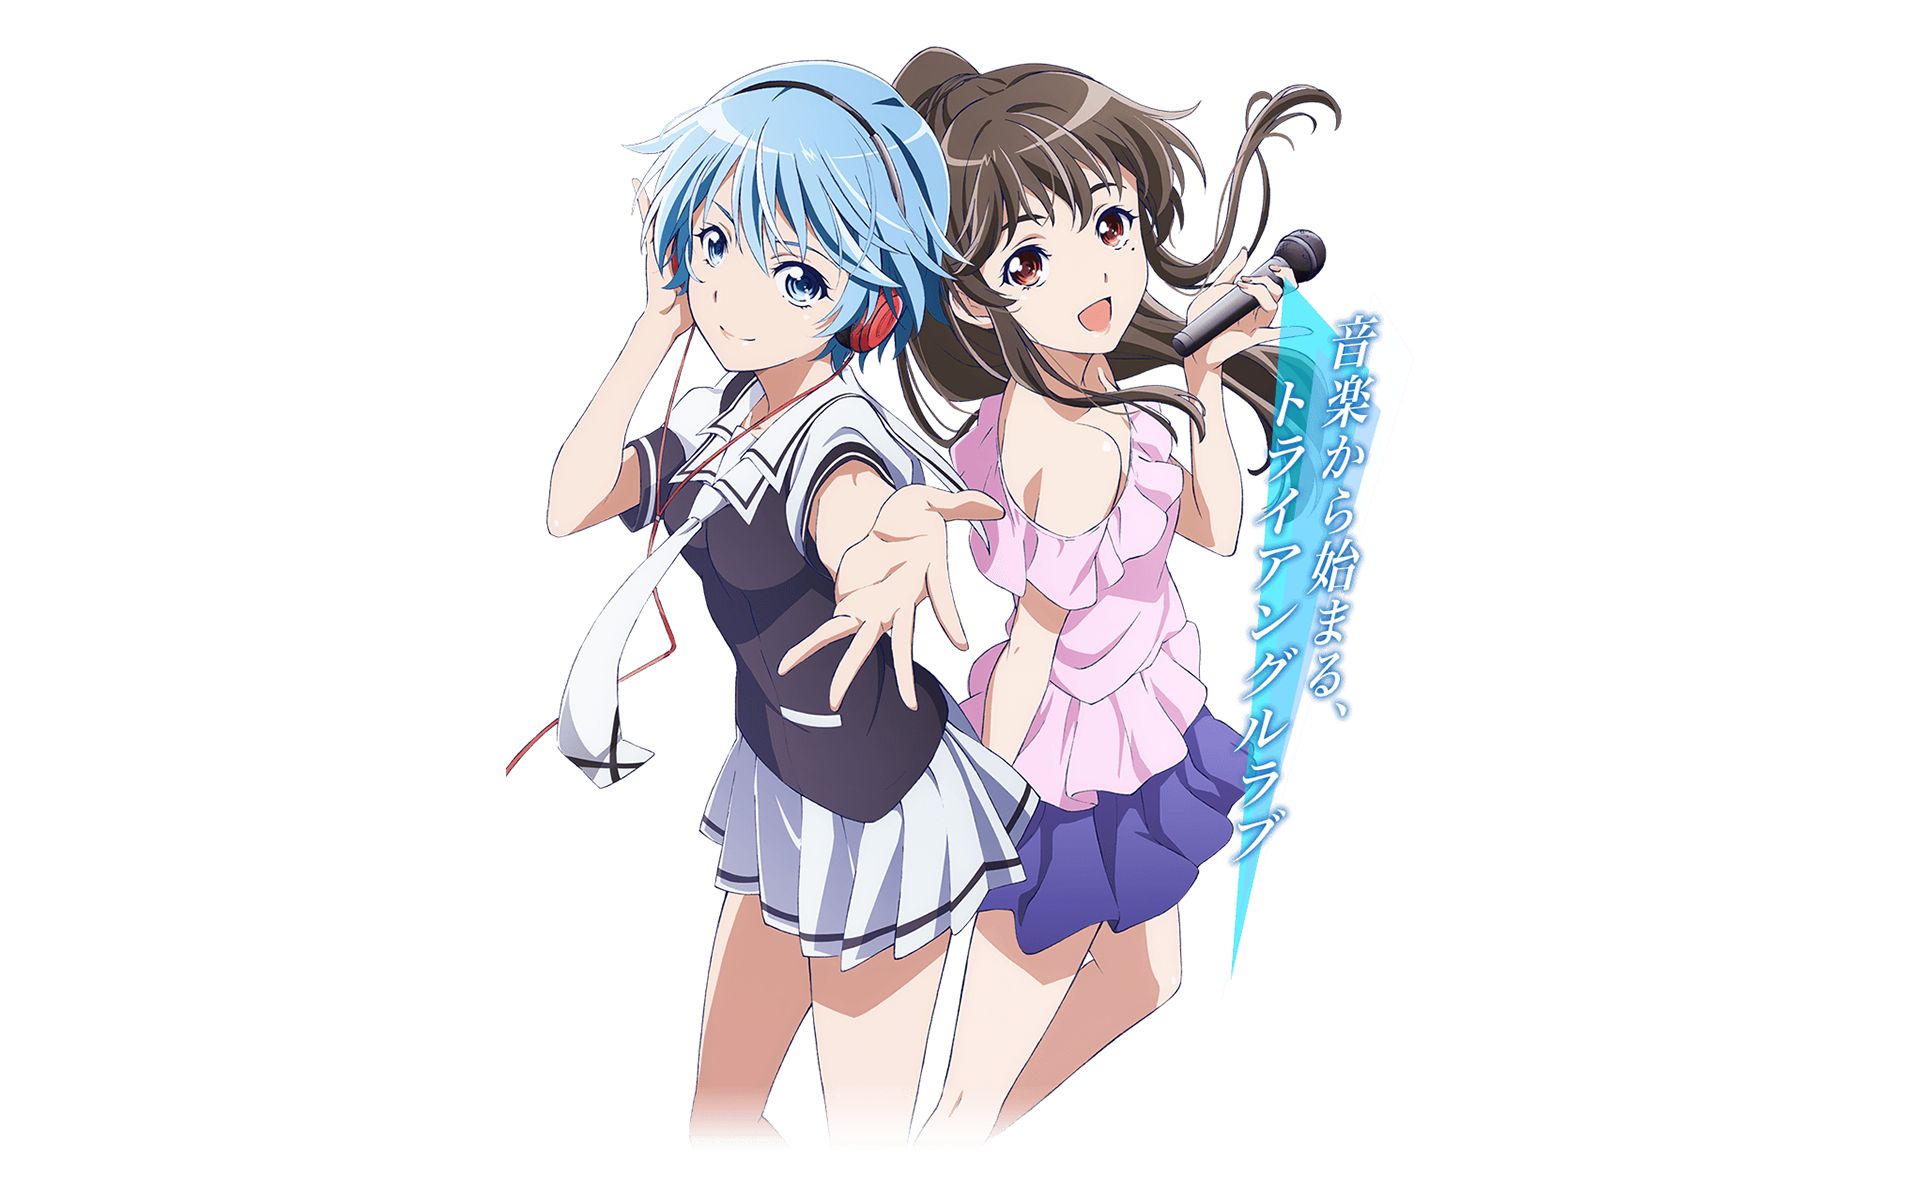 807172 Bild herunterladen animes, fuuka, fuuka akitsuki, koyuki hinashi - Hintergrundbilder und Bildschirmschoner kostenlos